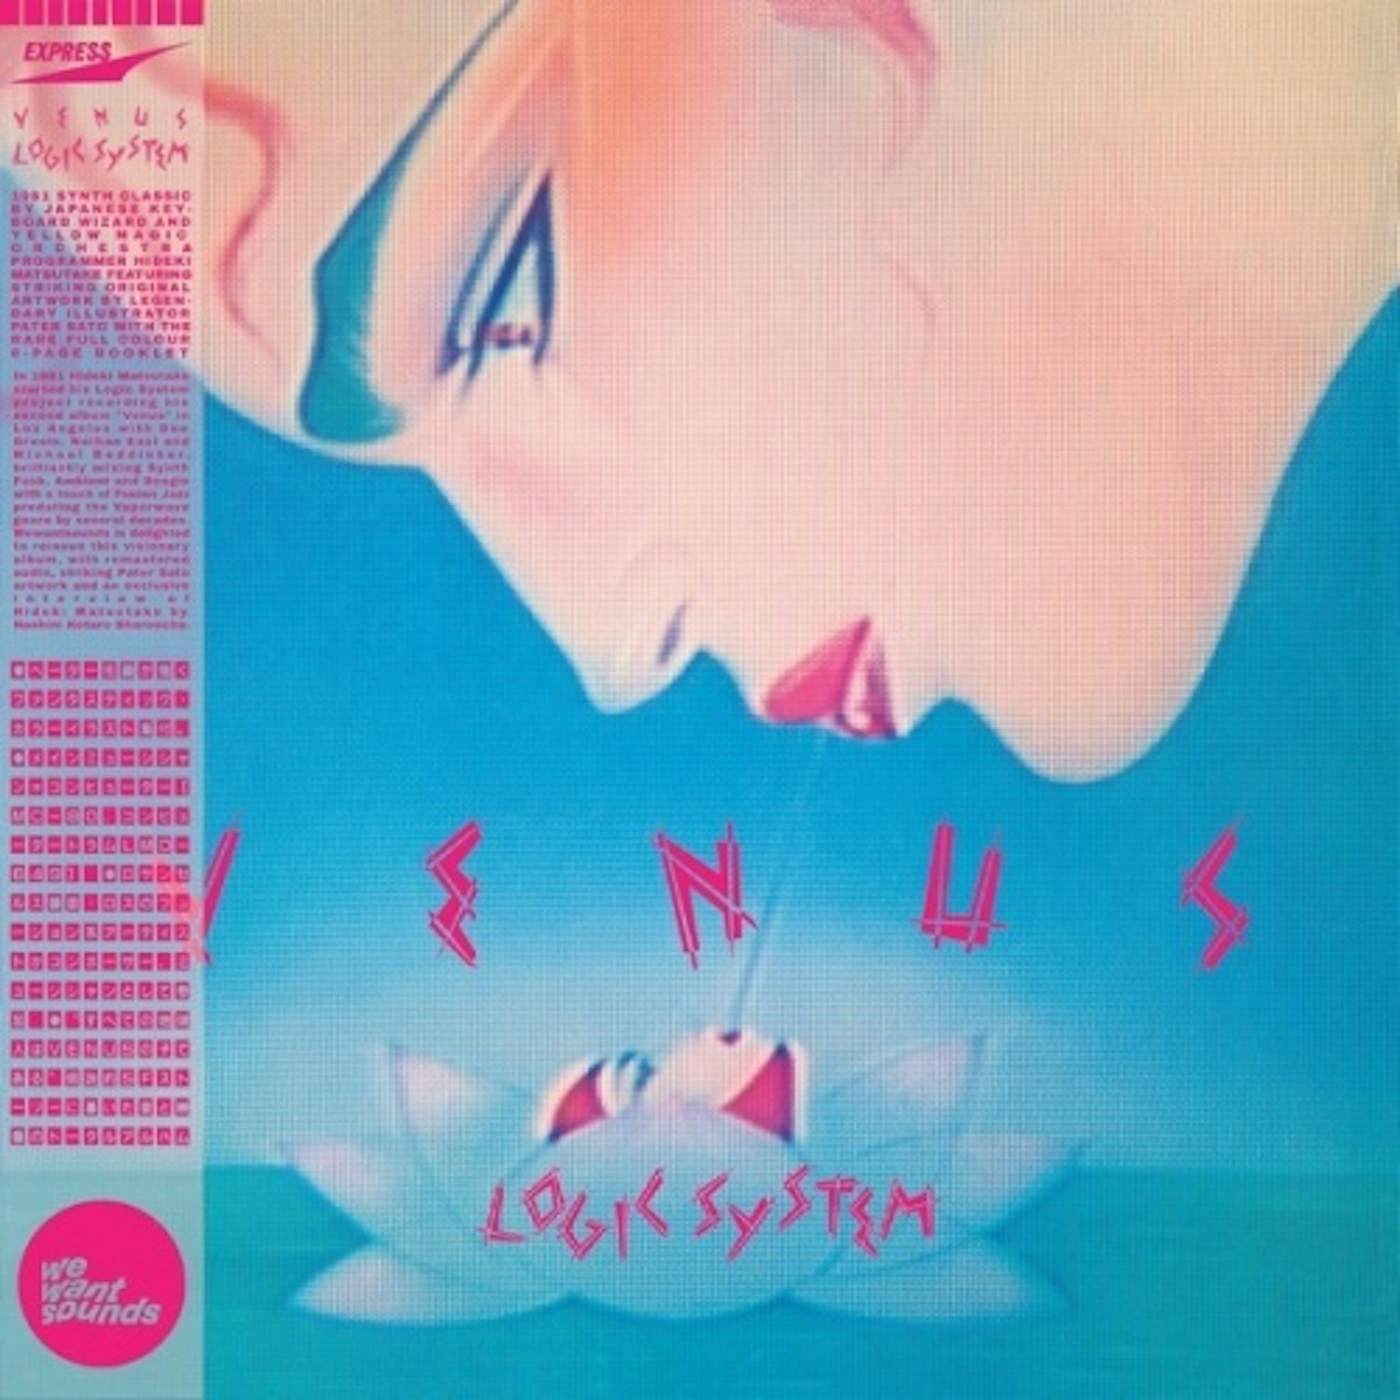 Logic System Venus Vinyl Record